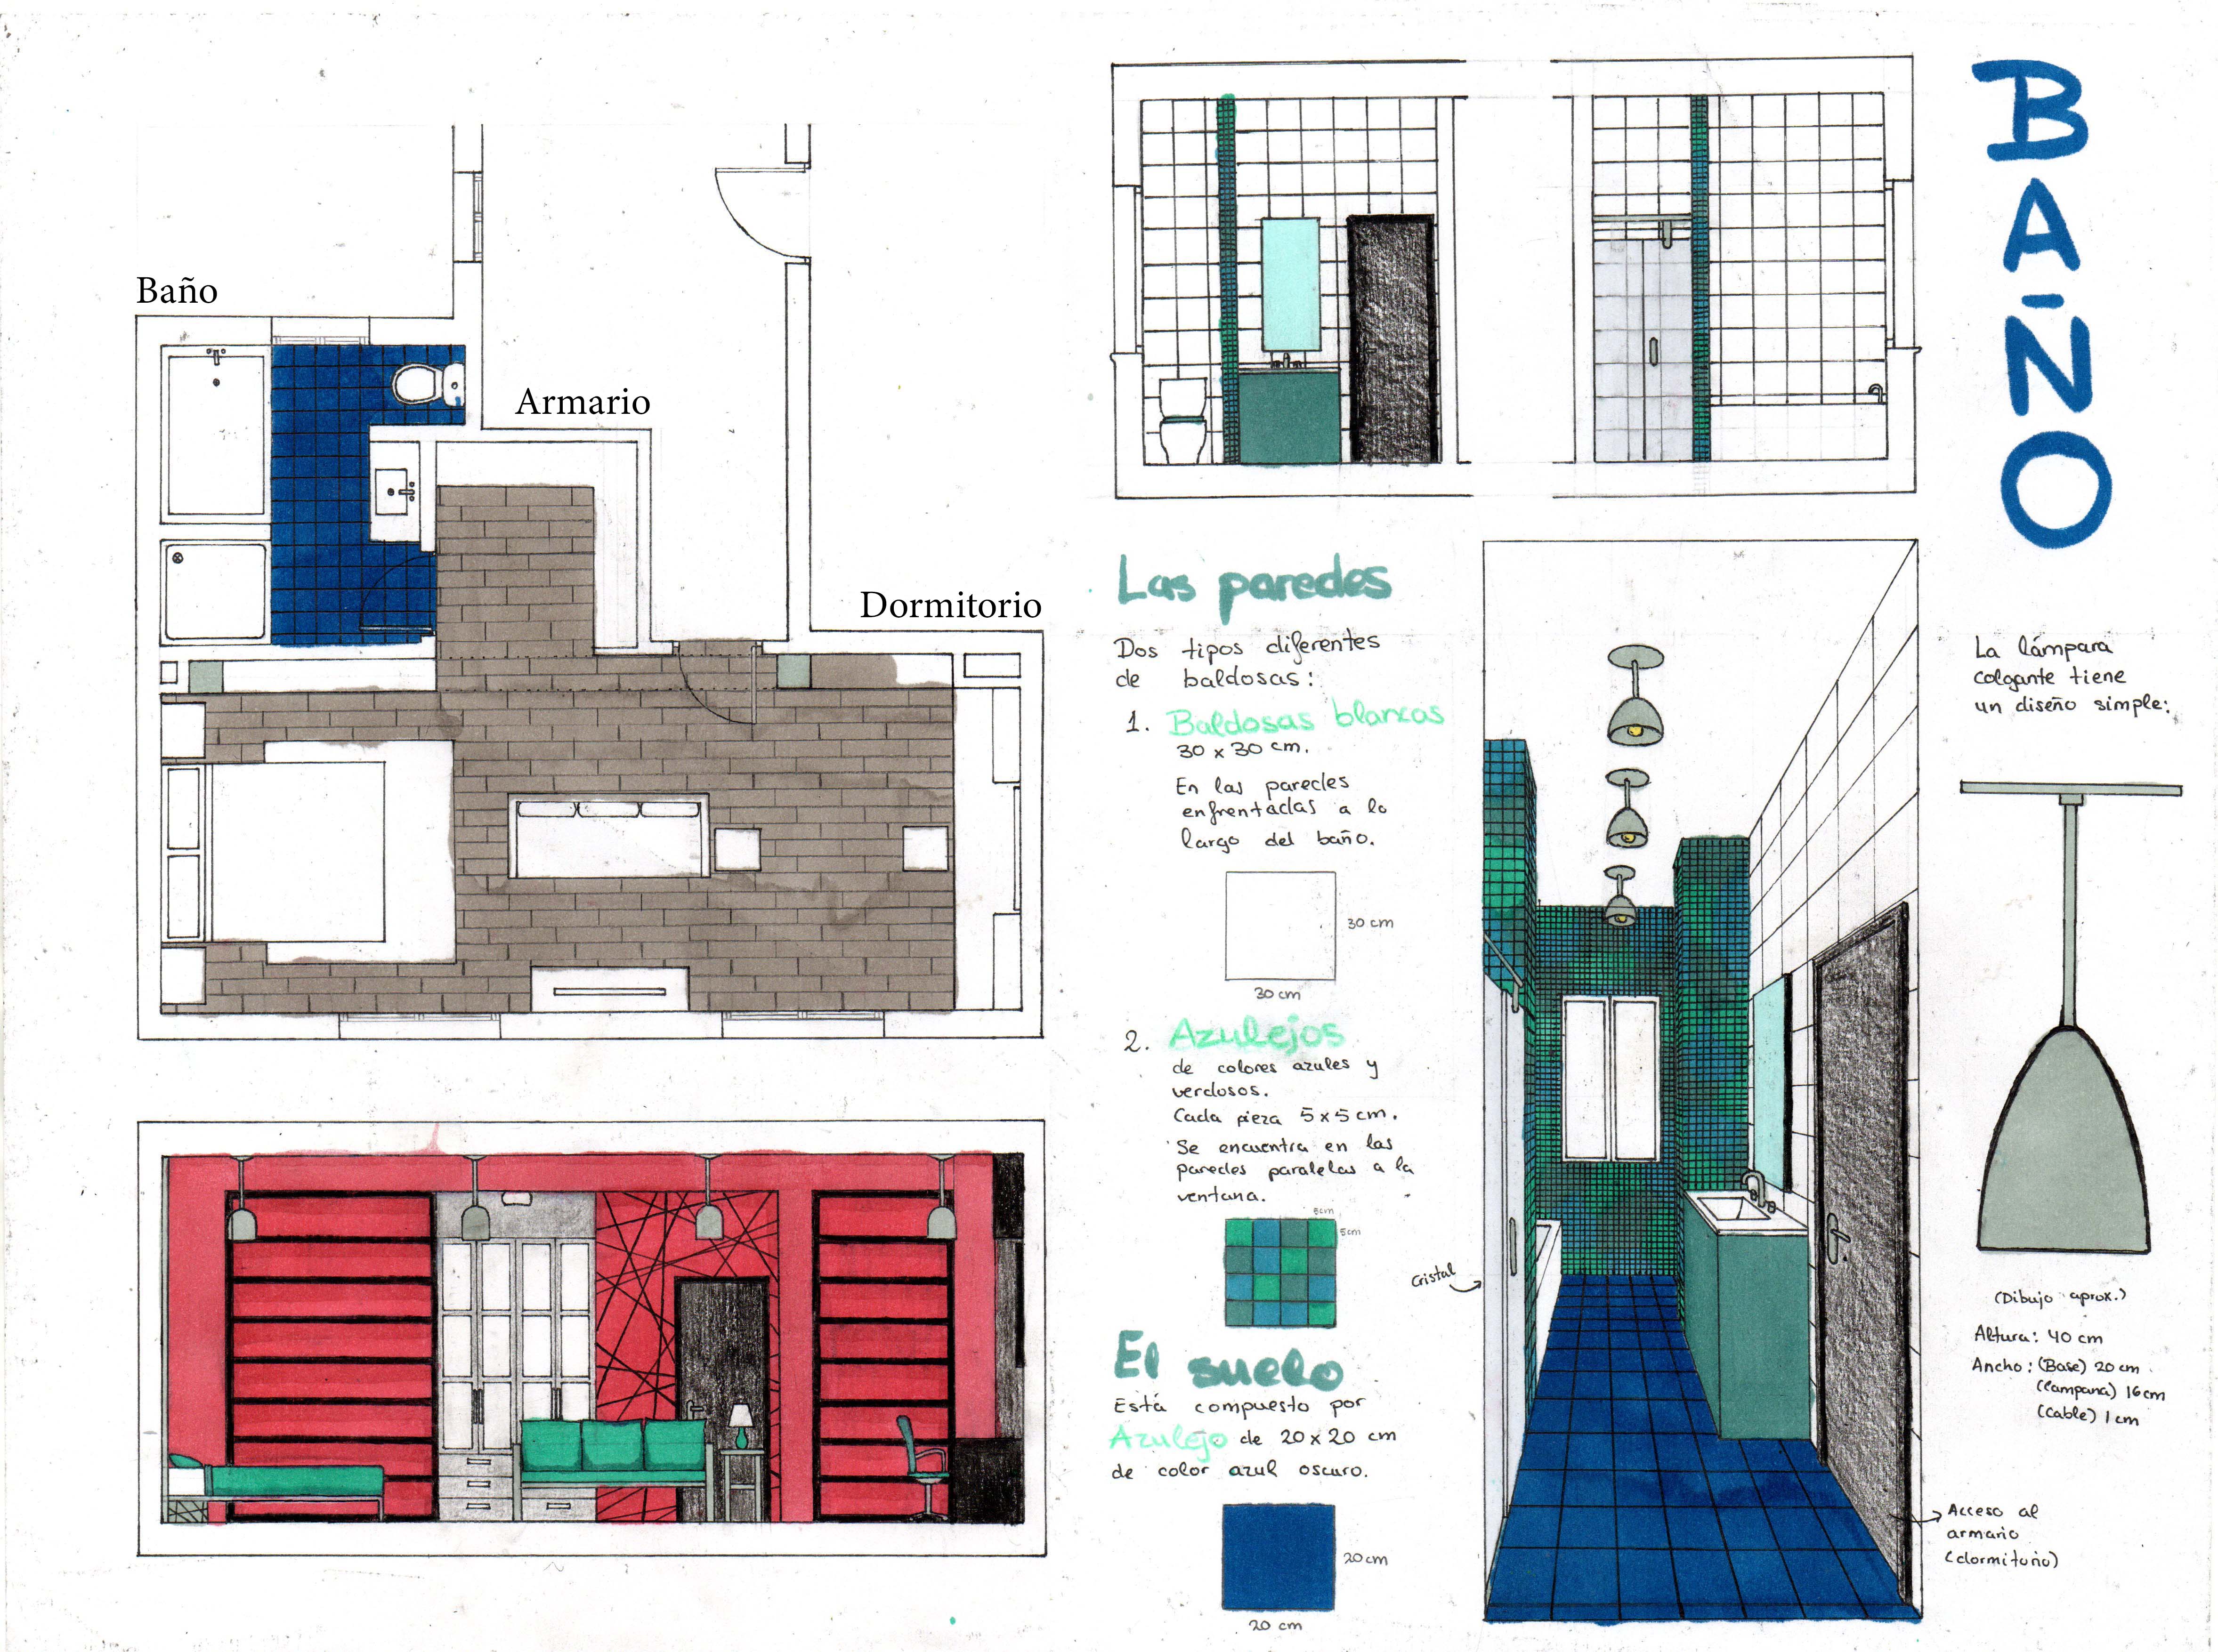 Dormitorio Ideal para estudiante by Ana Paola Cubas Zanabria - Creative Work